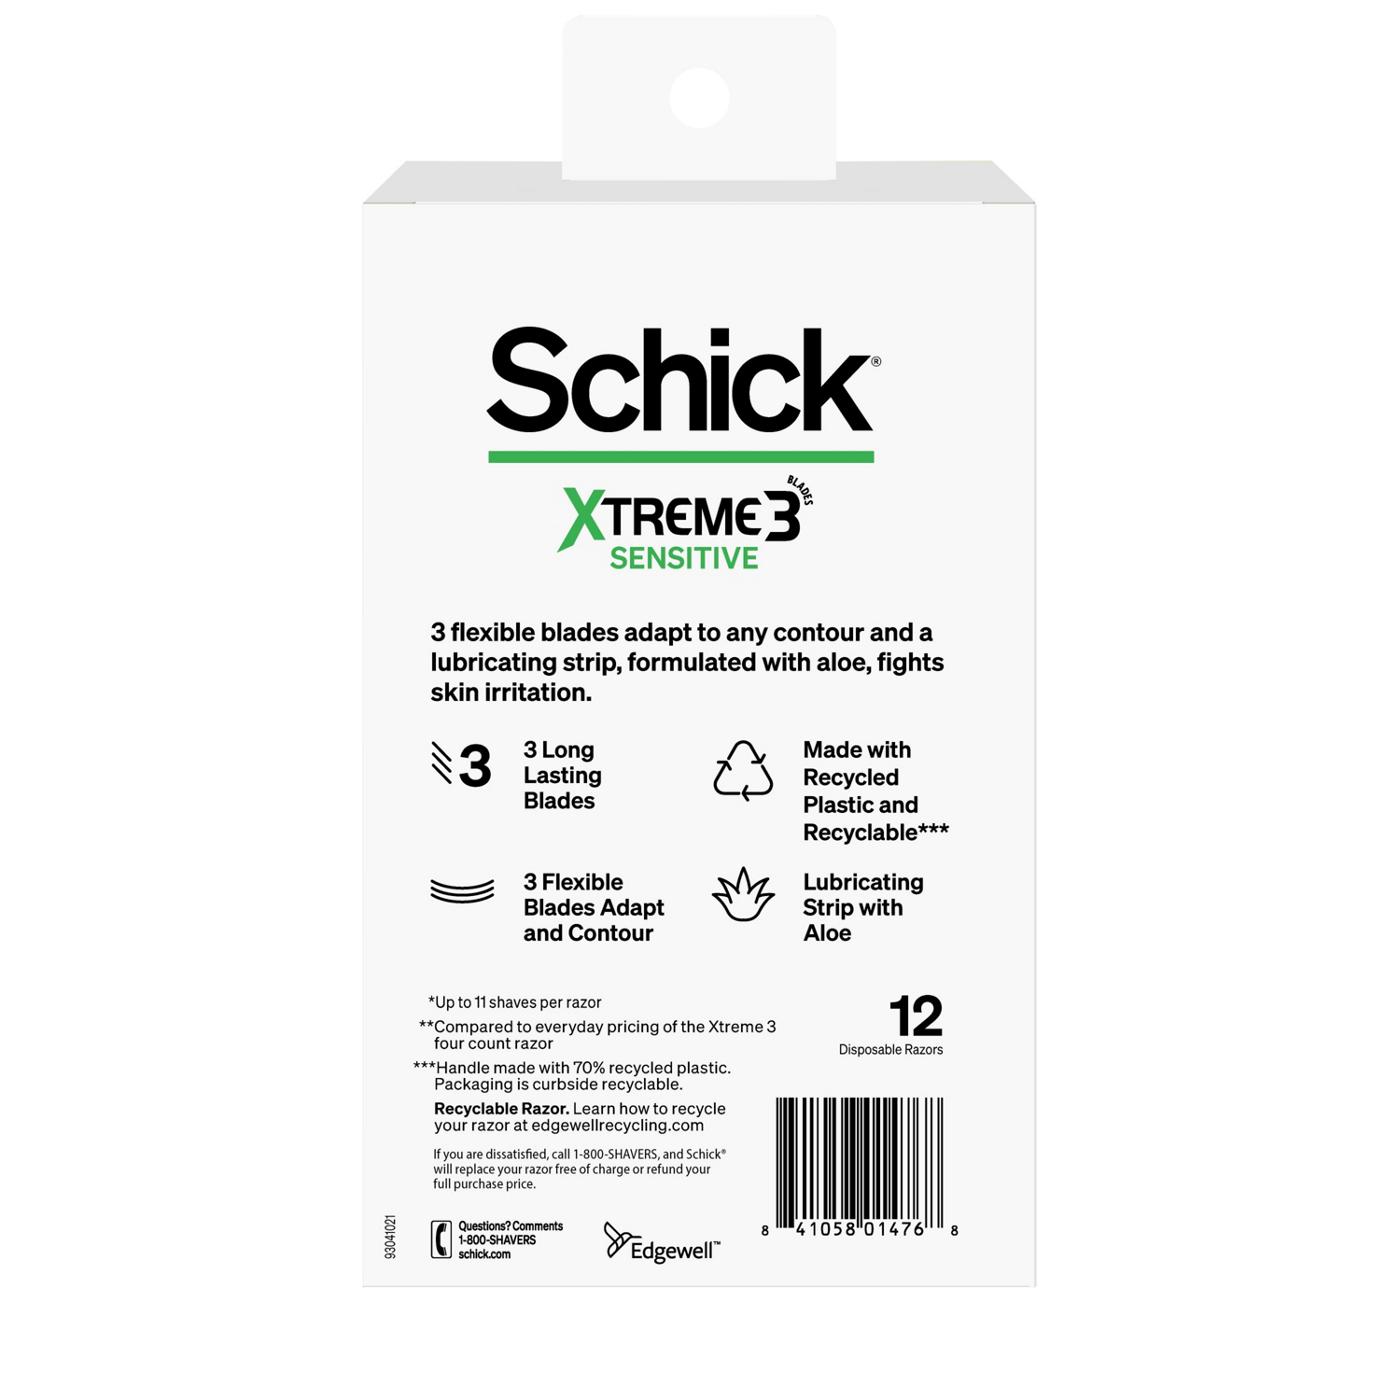 Schick Xtreme 3 Sensitive Disposable Razors; image 2 of 2